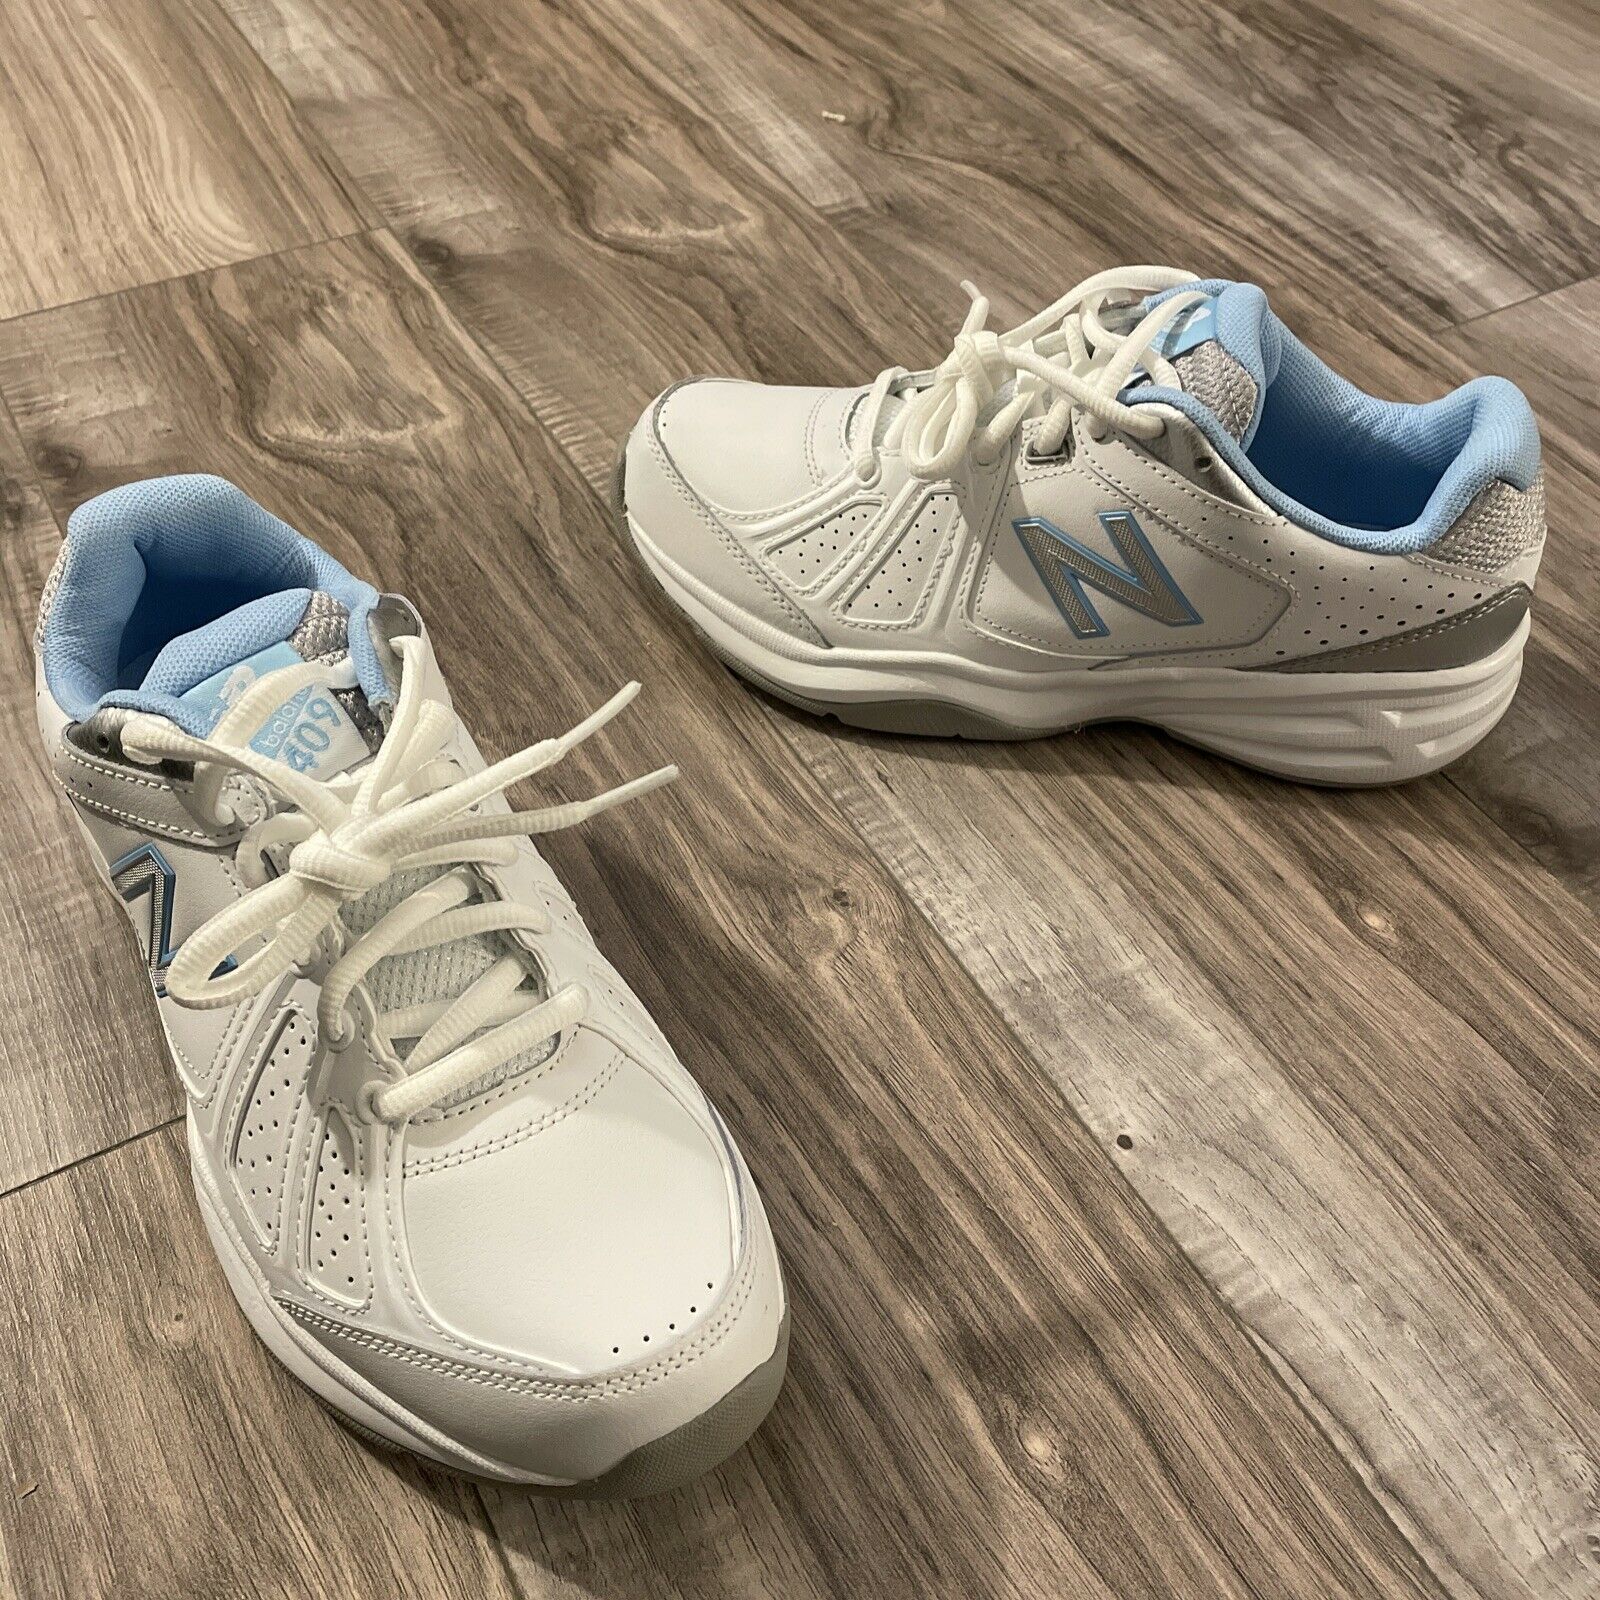 New Balance 409 Walking Shoes WX409WB3 White/Lt Blue Leather Women’s Size 8 B